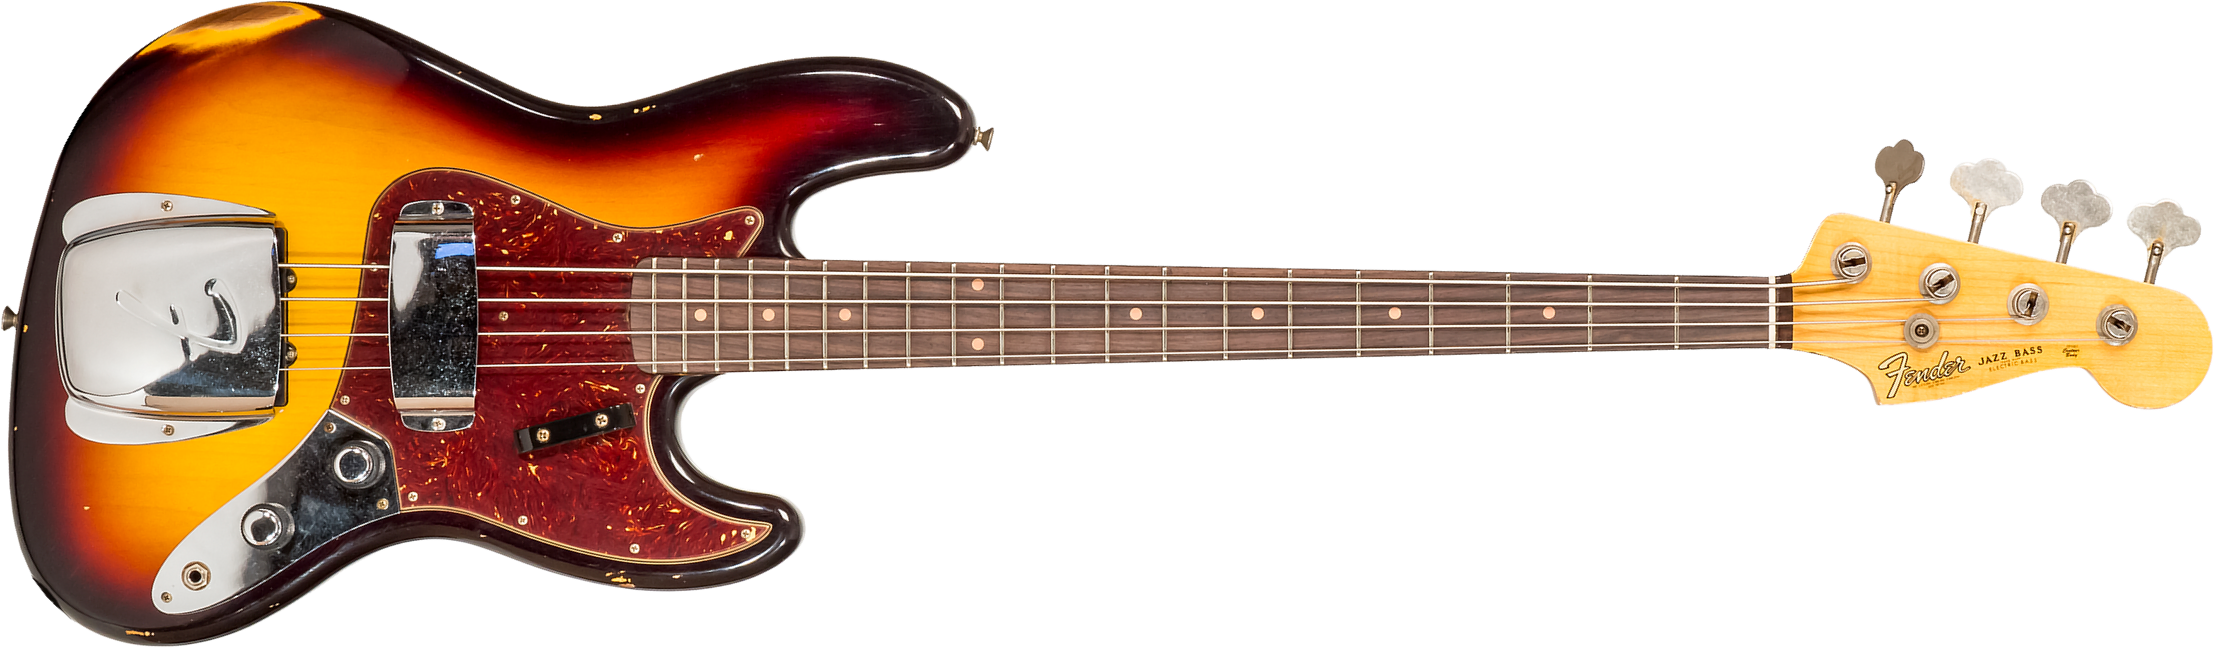 Fender Custom Shop  Jazz Bass 1962 Rw #cz569015 - Relic 3-color Sunburst - Solidbody E-bass - Main picture